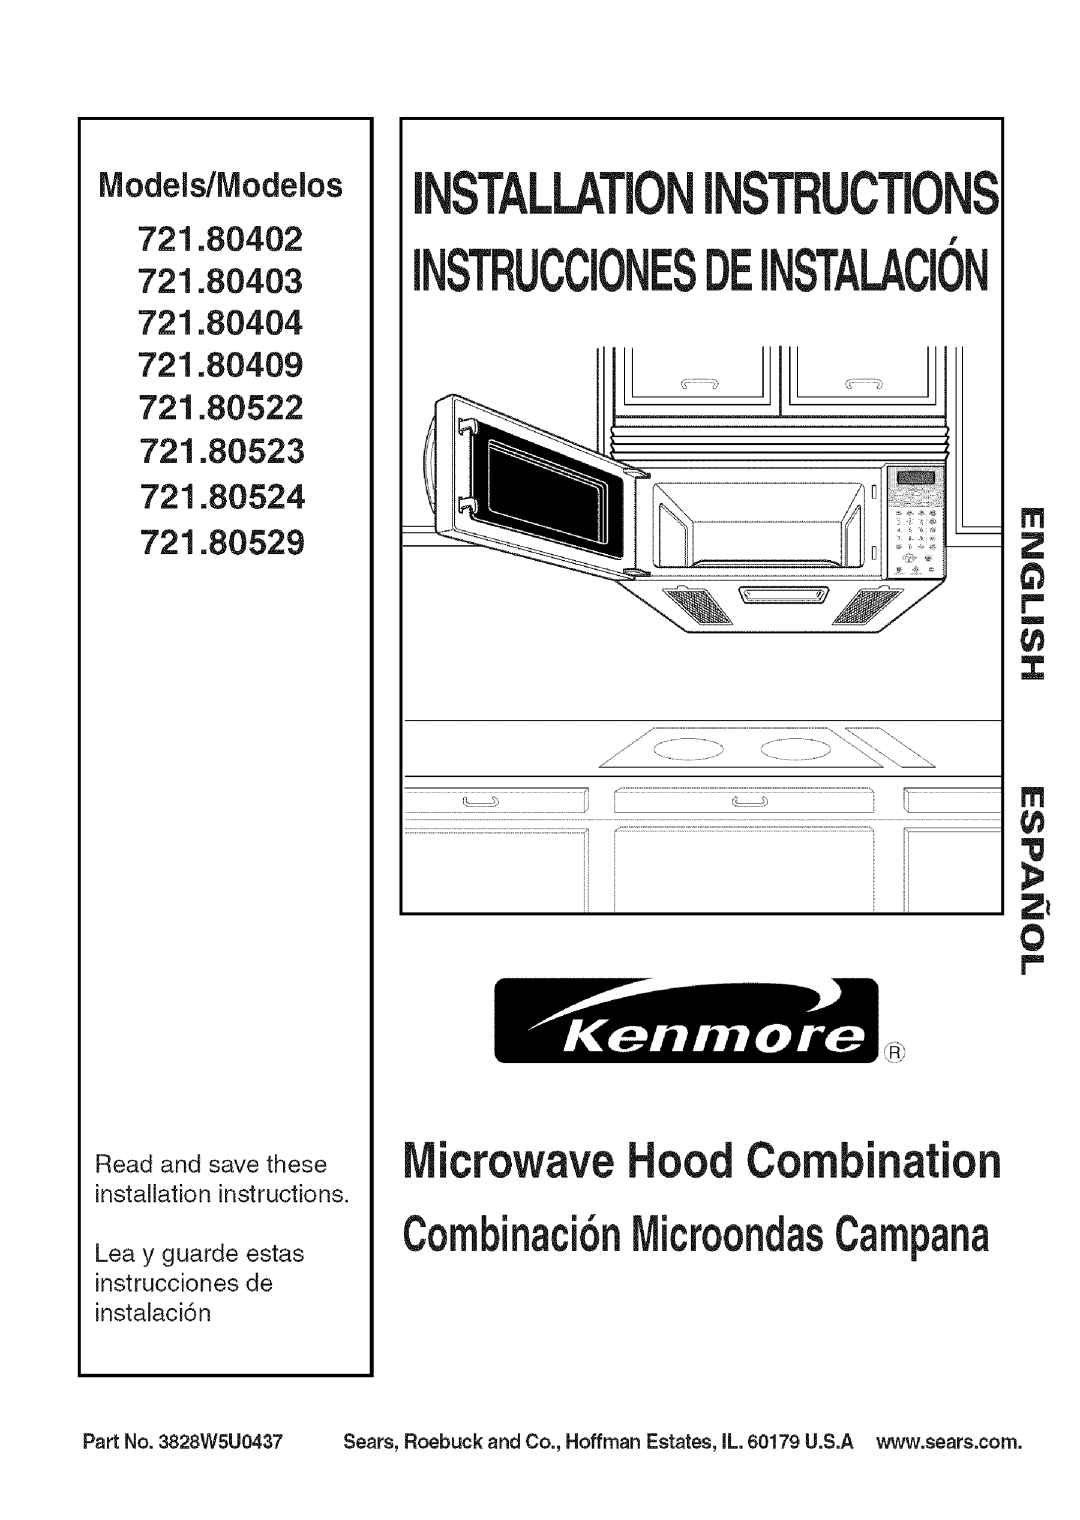 Kenmore 721.80404 installation instructions Instructions, rowave Hood Combination, Combinaci6nMicroondasCampana, 721.80402 